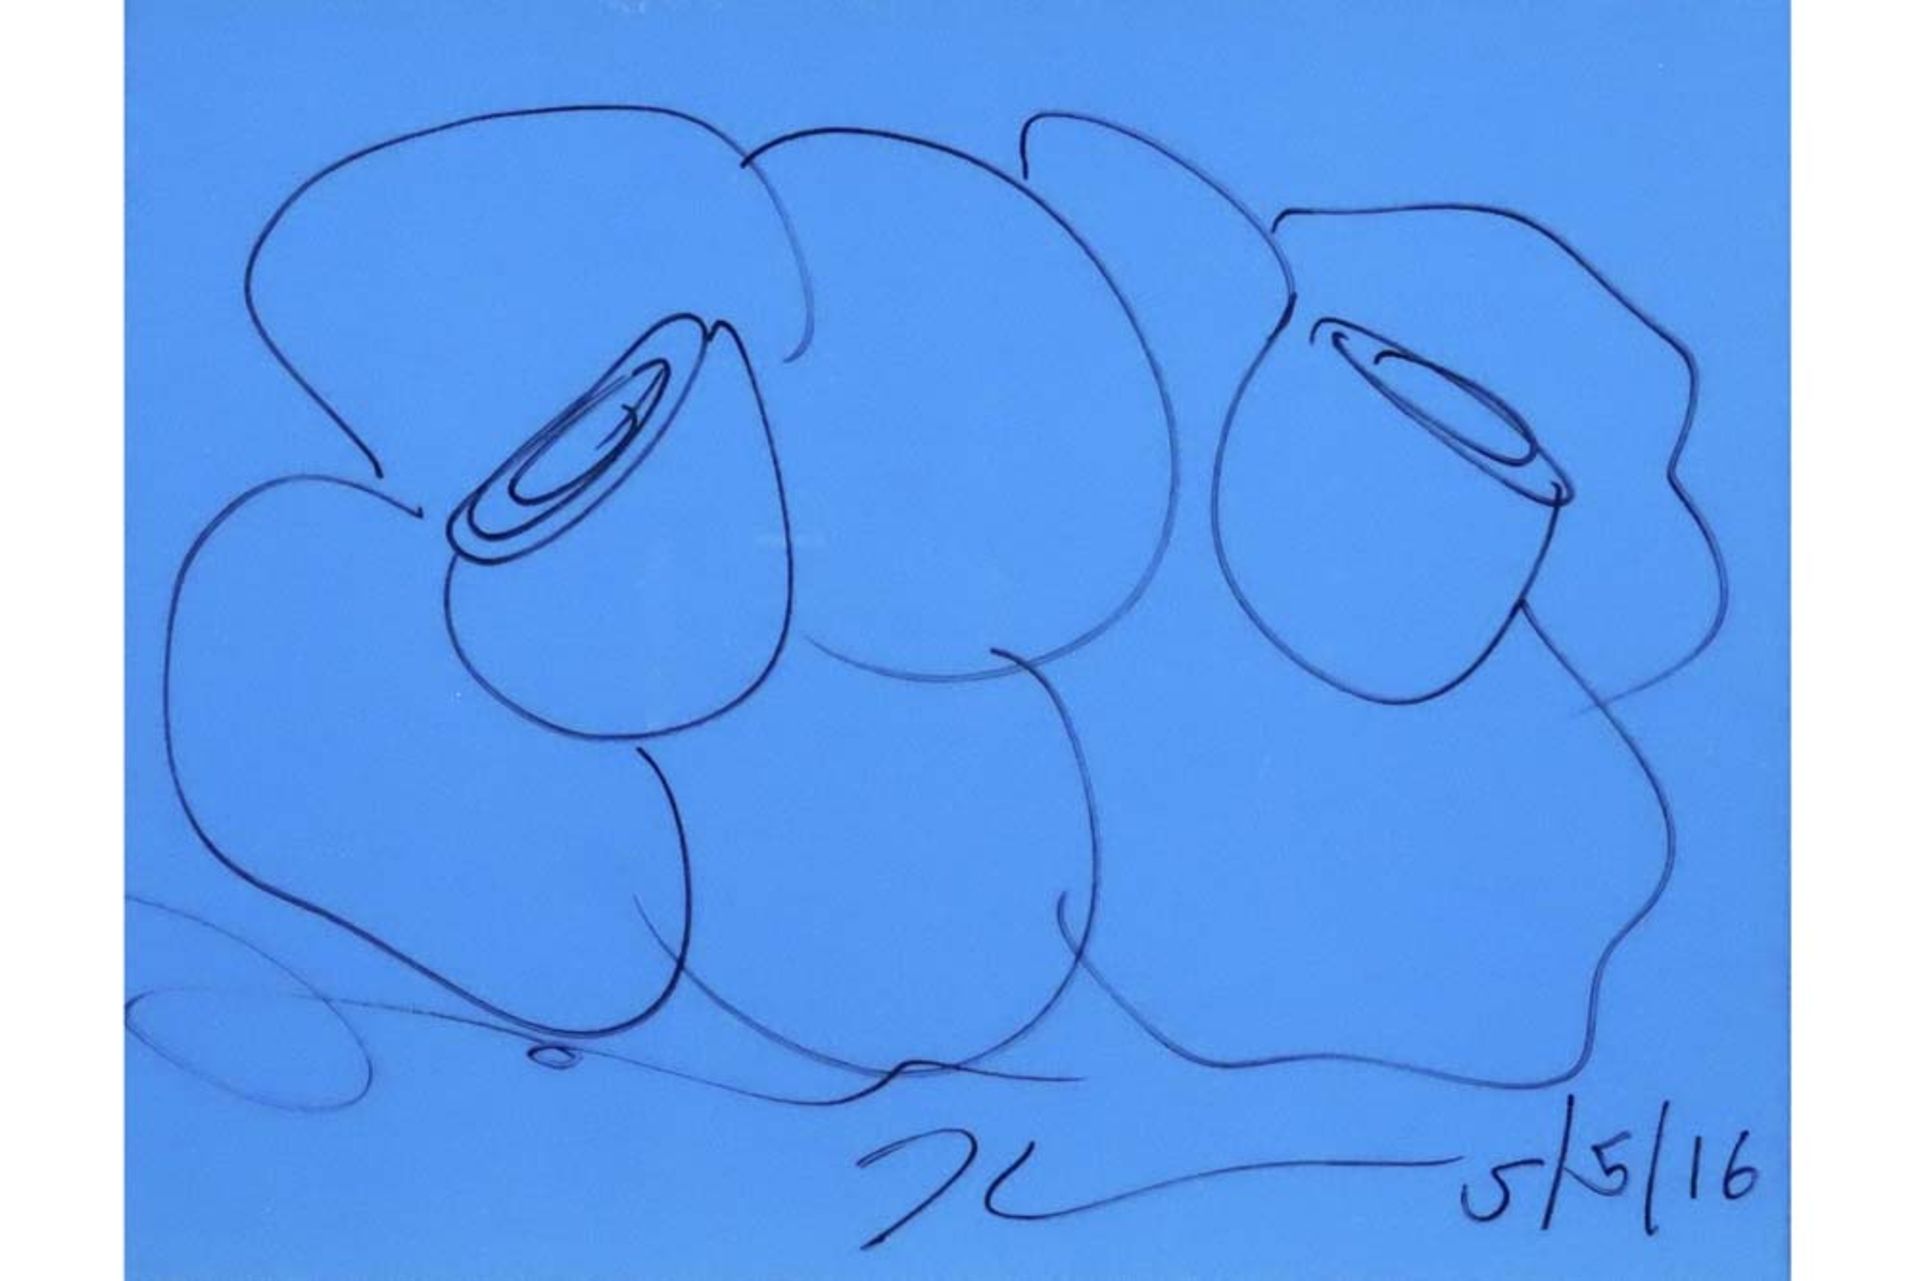 Jeff Koons signed "Flowers" drawing in felt-tip pen on blue paper || KOONS JEFF (°1955) tekening